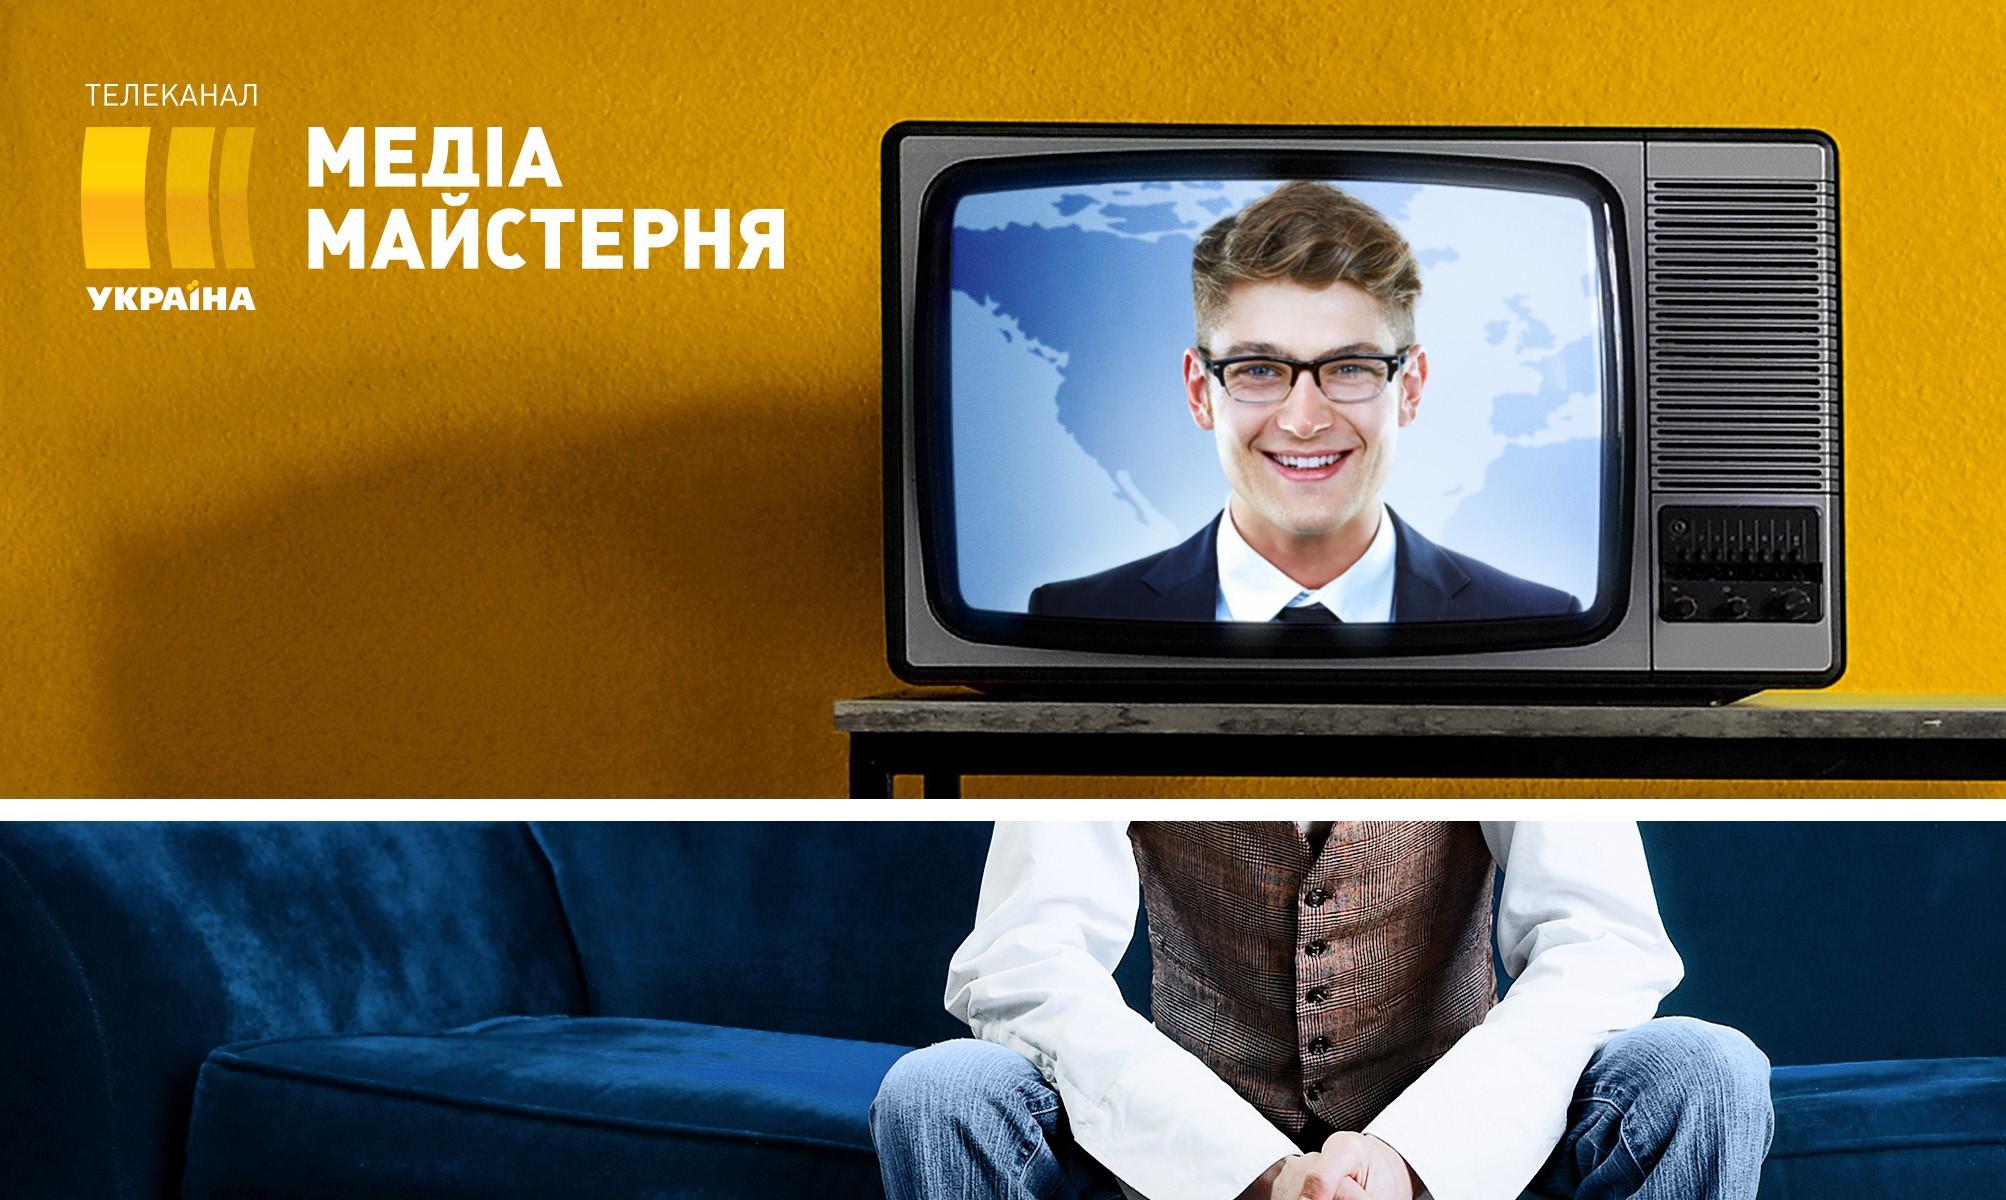 Media Maysternya / Медиа Мастерская / Медіа Майстерня